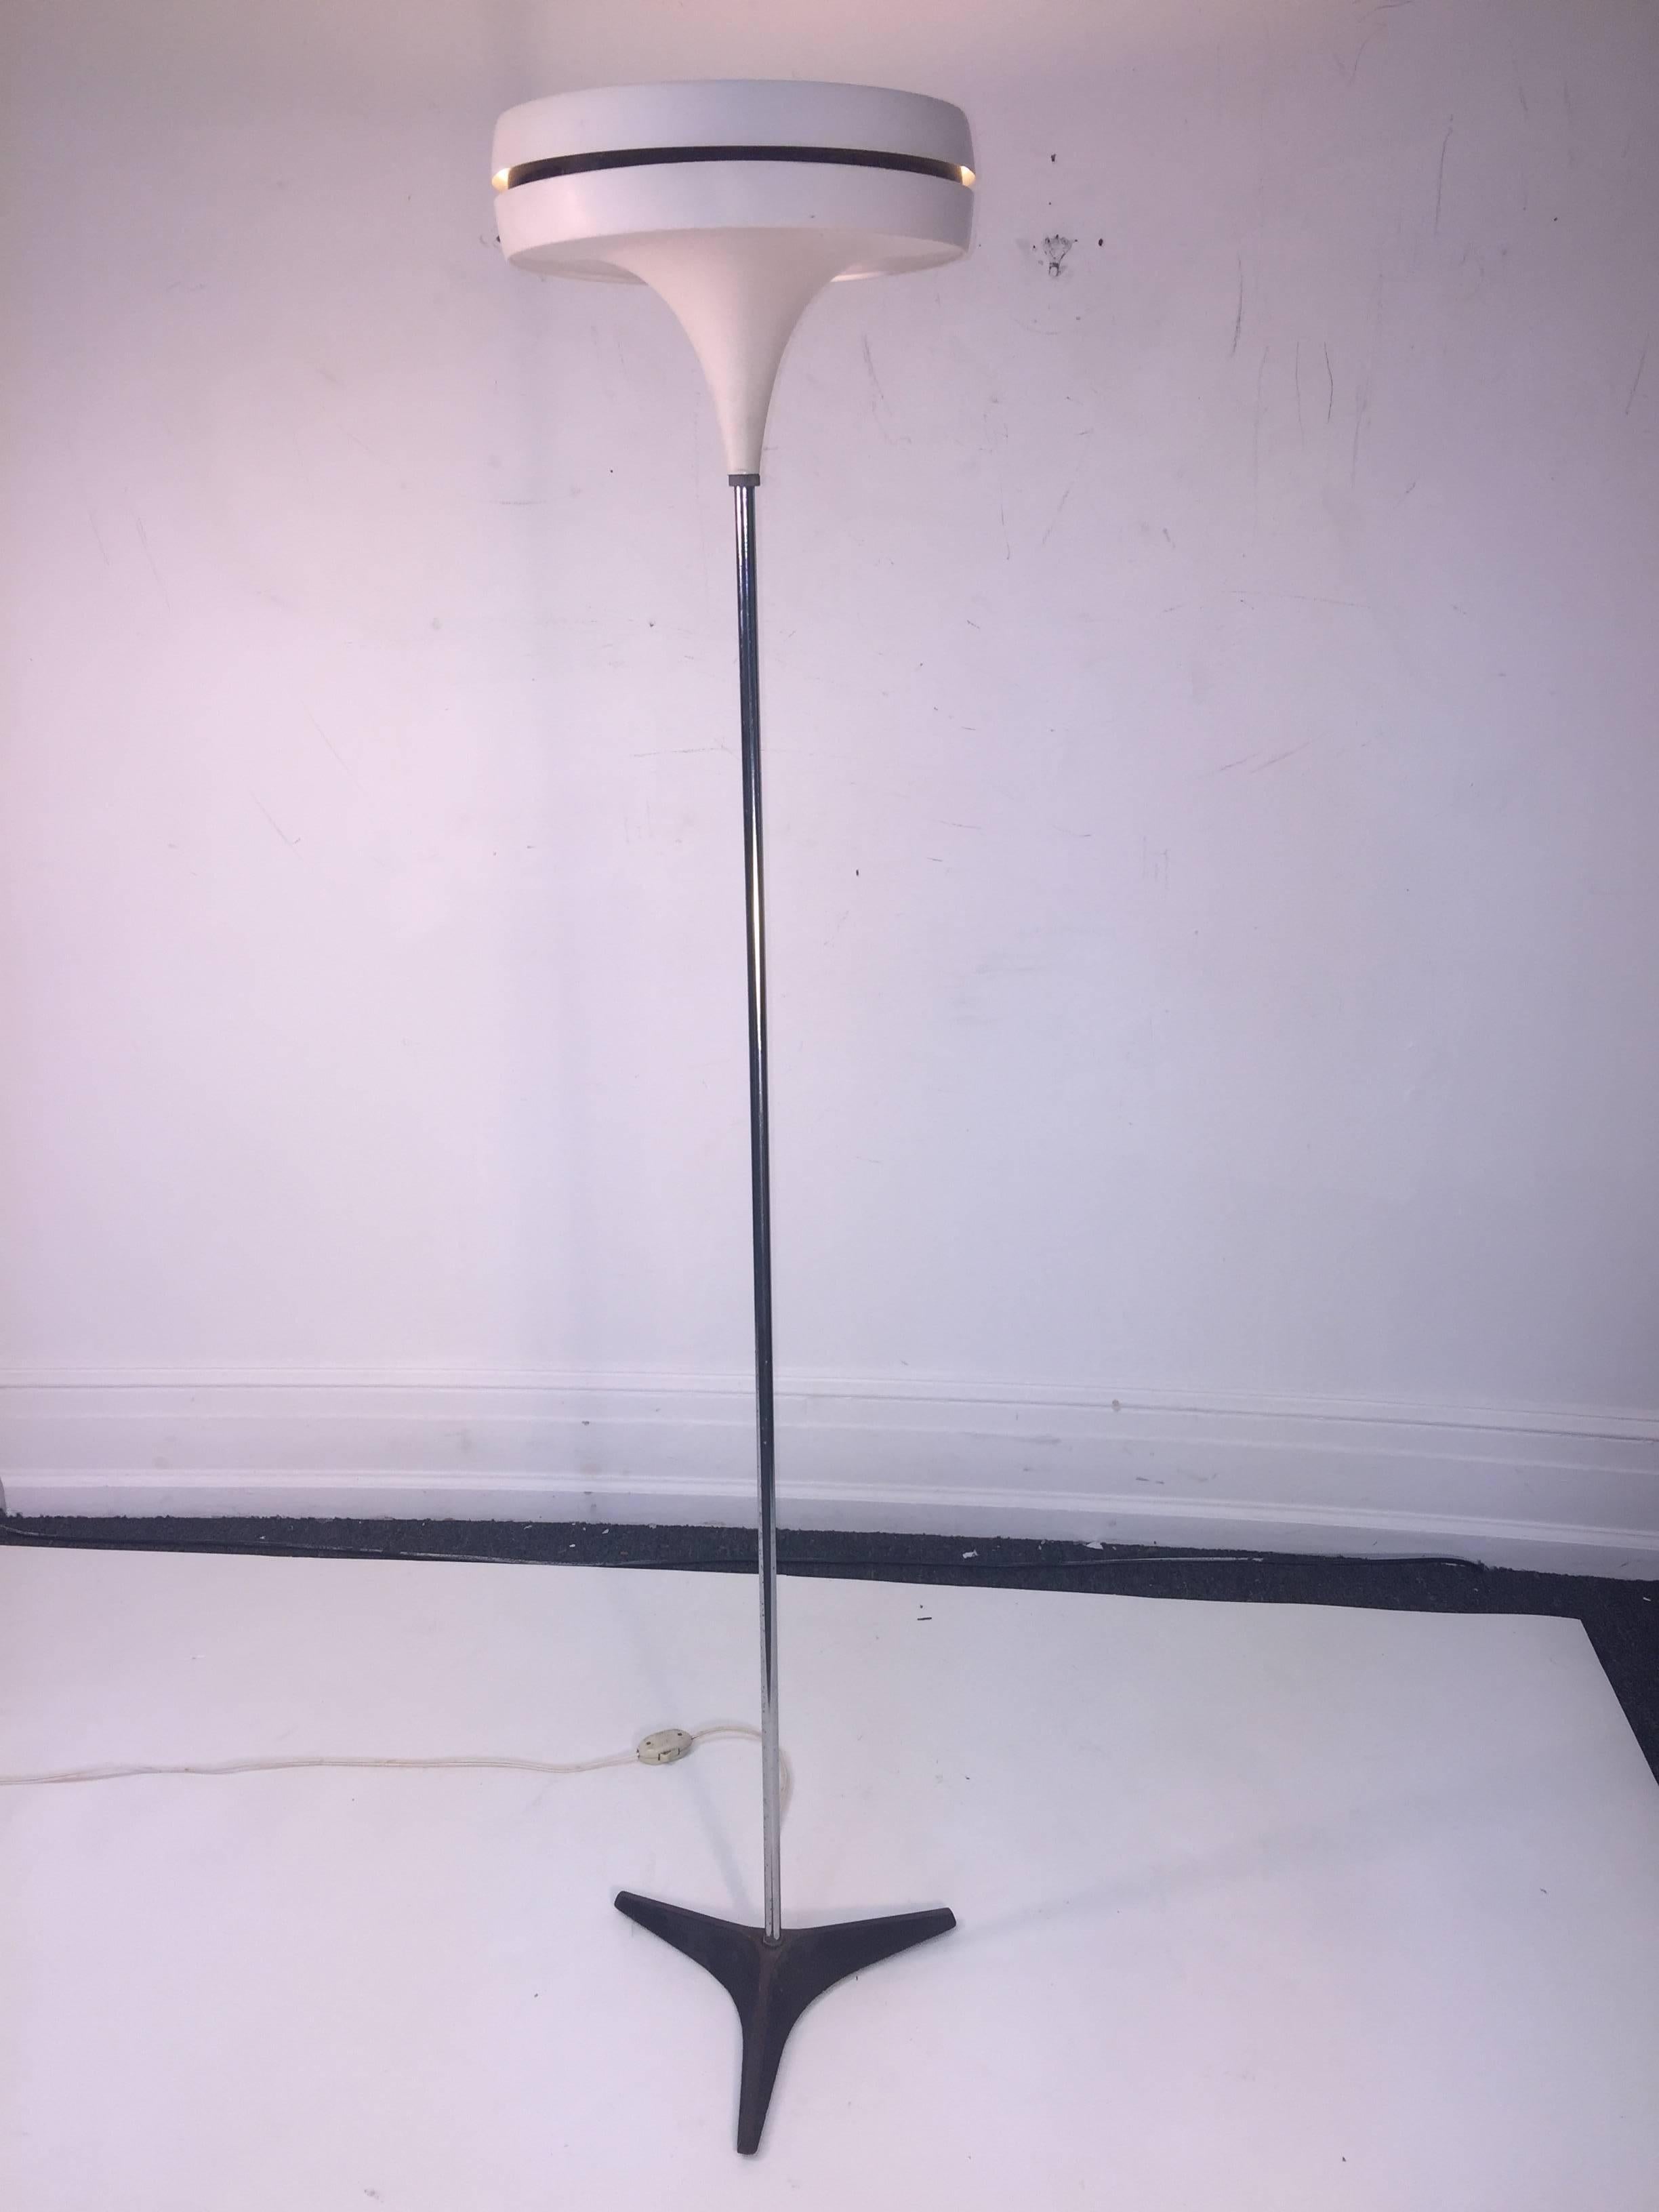 Late 20th Century Modern Floor Lamp Designed by RAAK